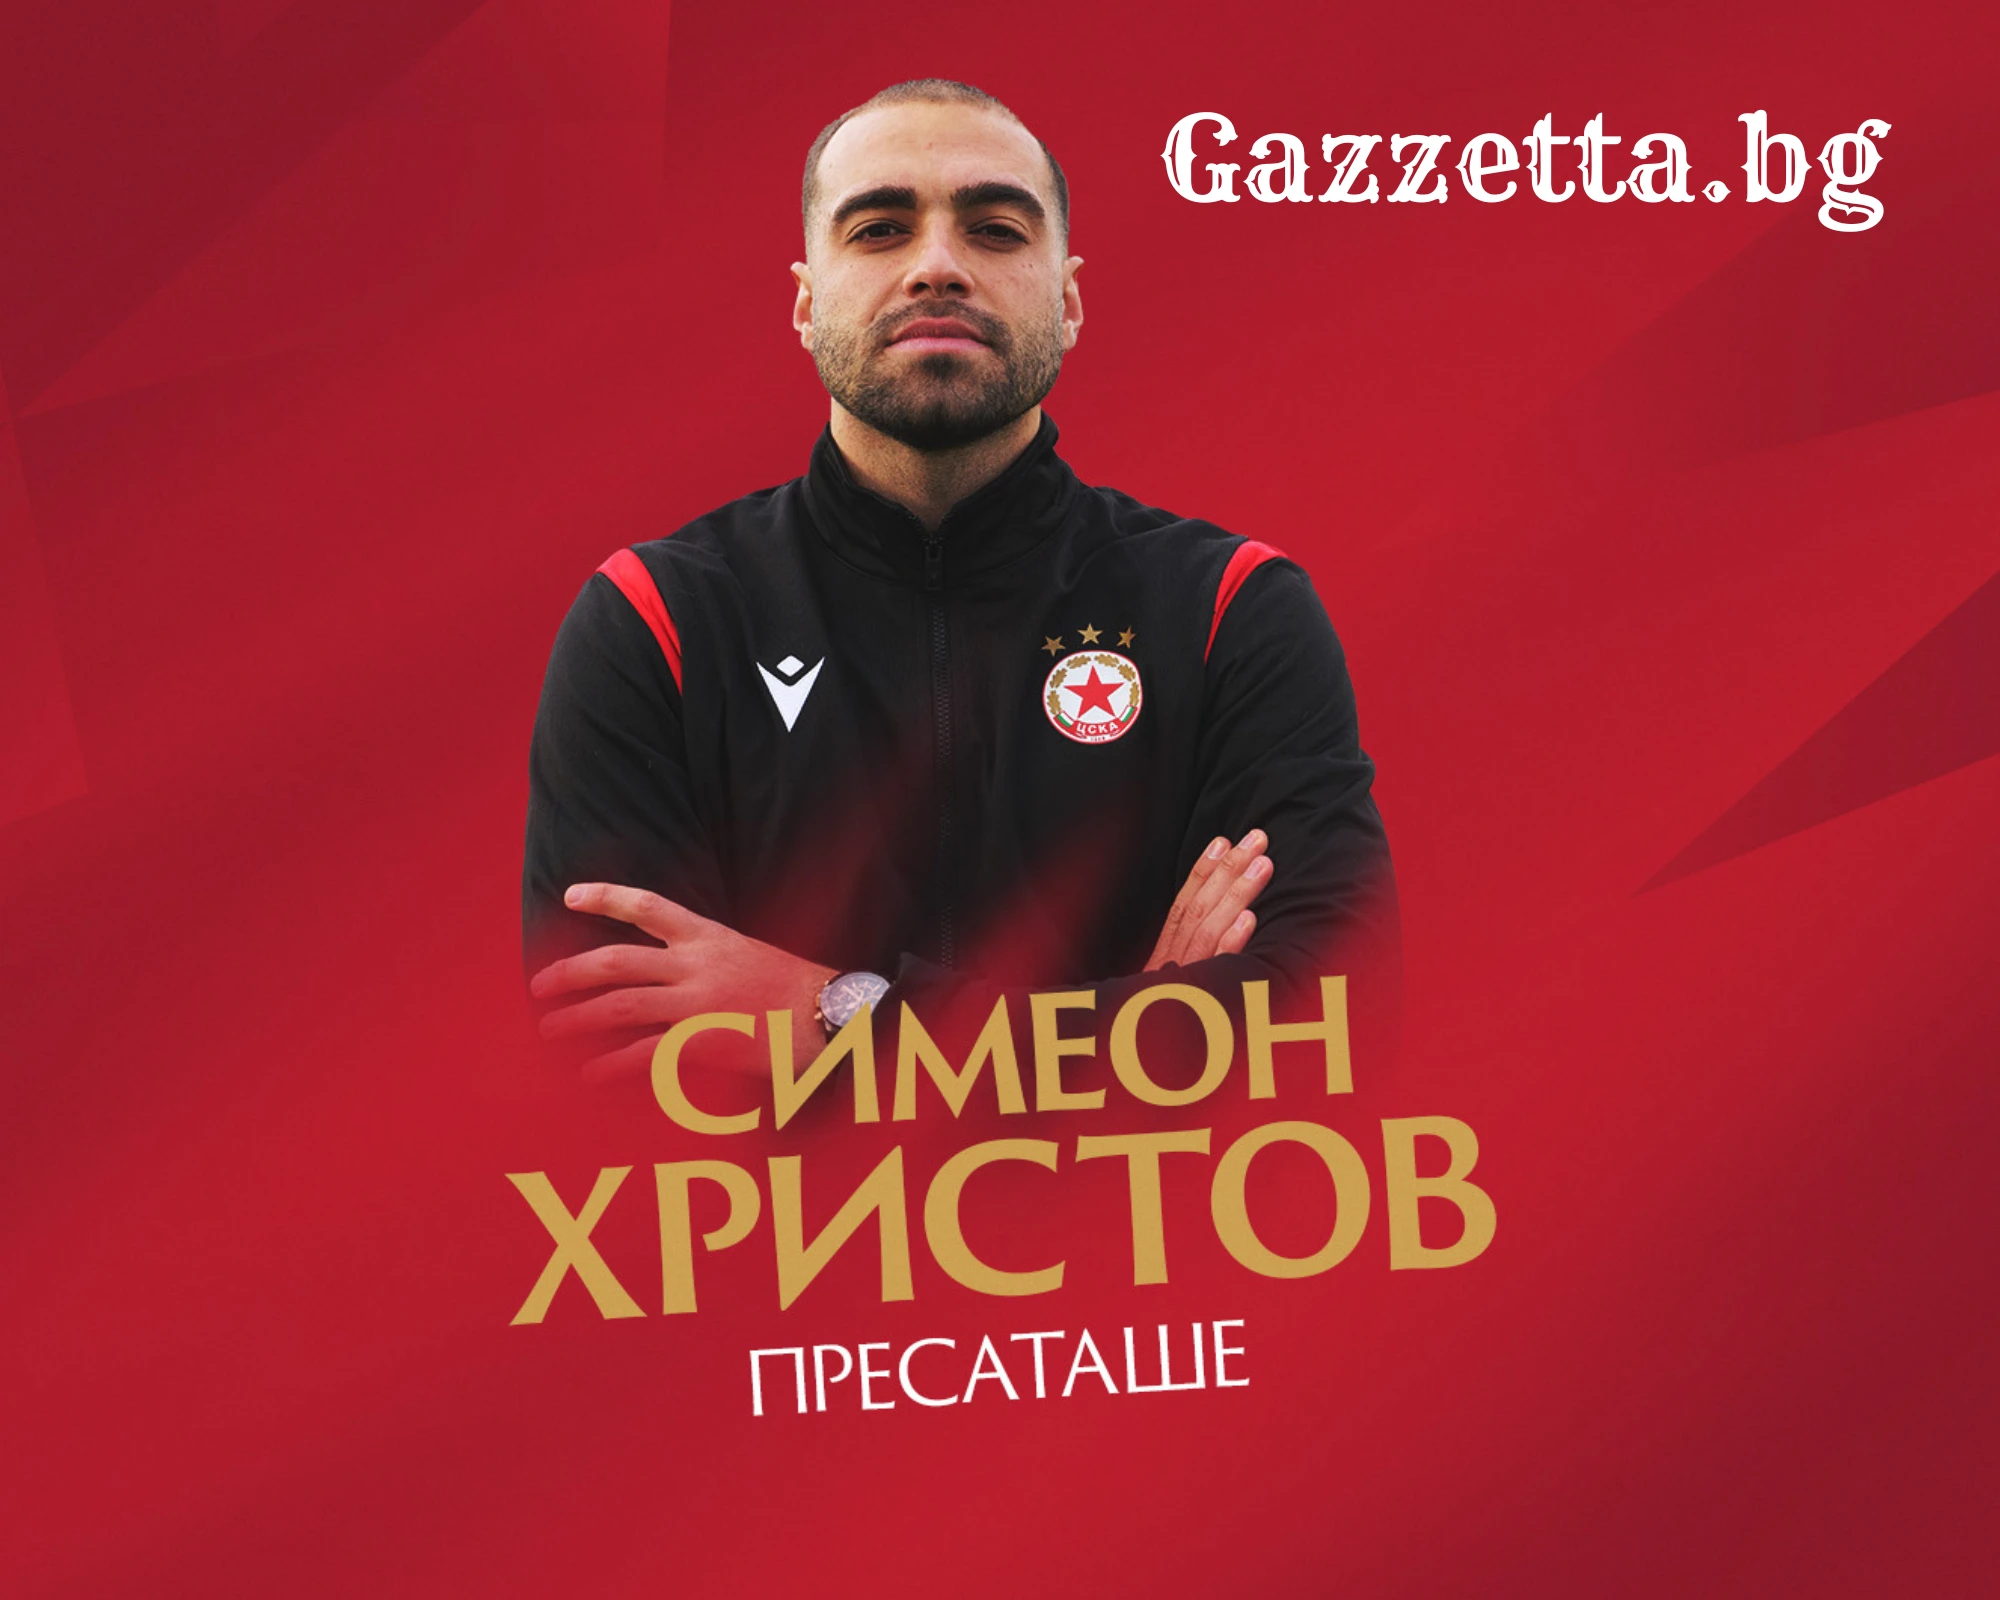 Симеон Христов е новото пресаташе на ЦСКА